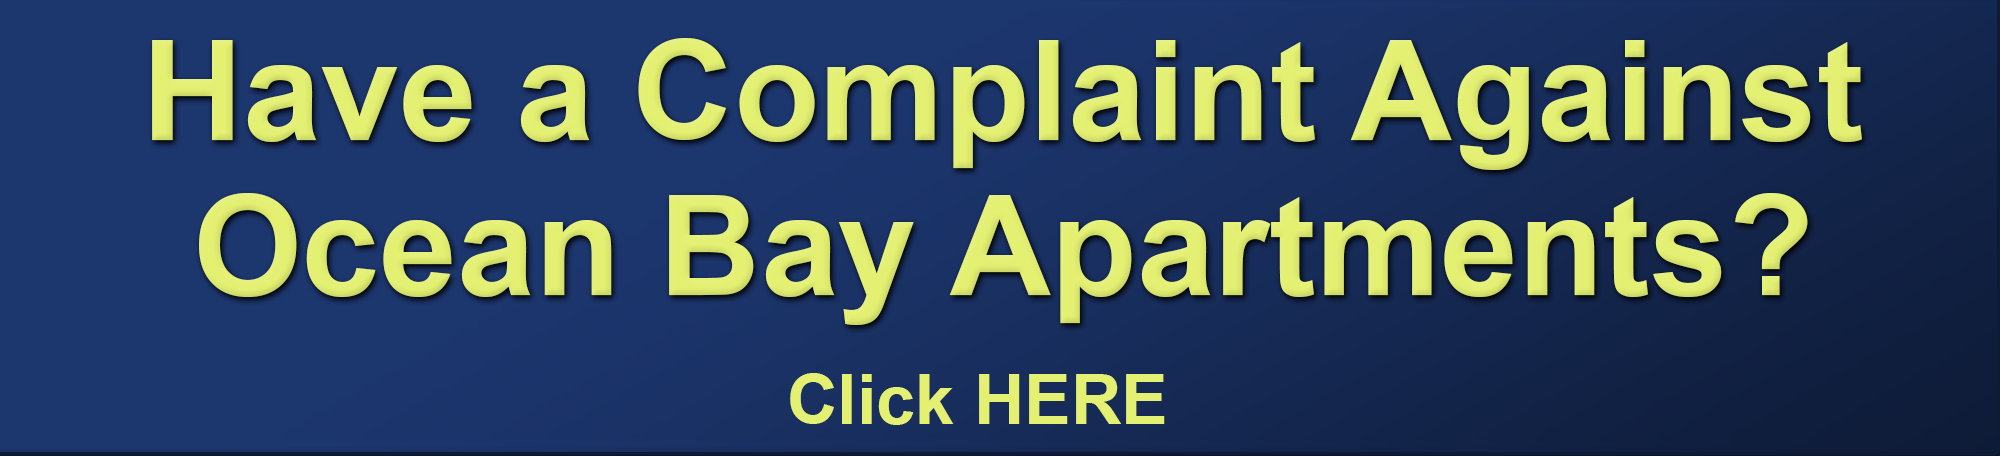 Have A Complaint Against Ocean Bay Apartments?